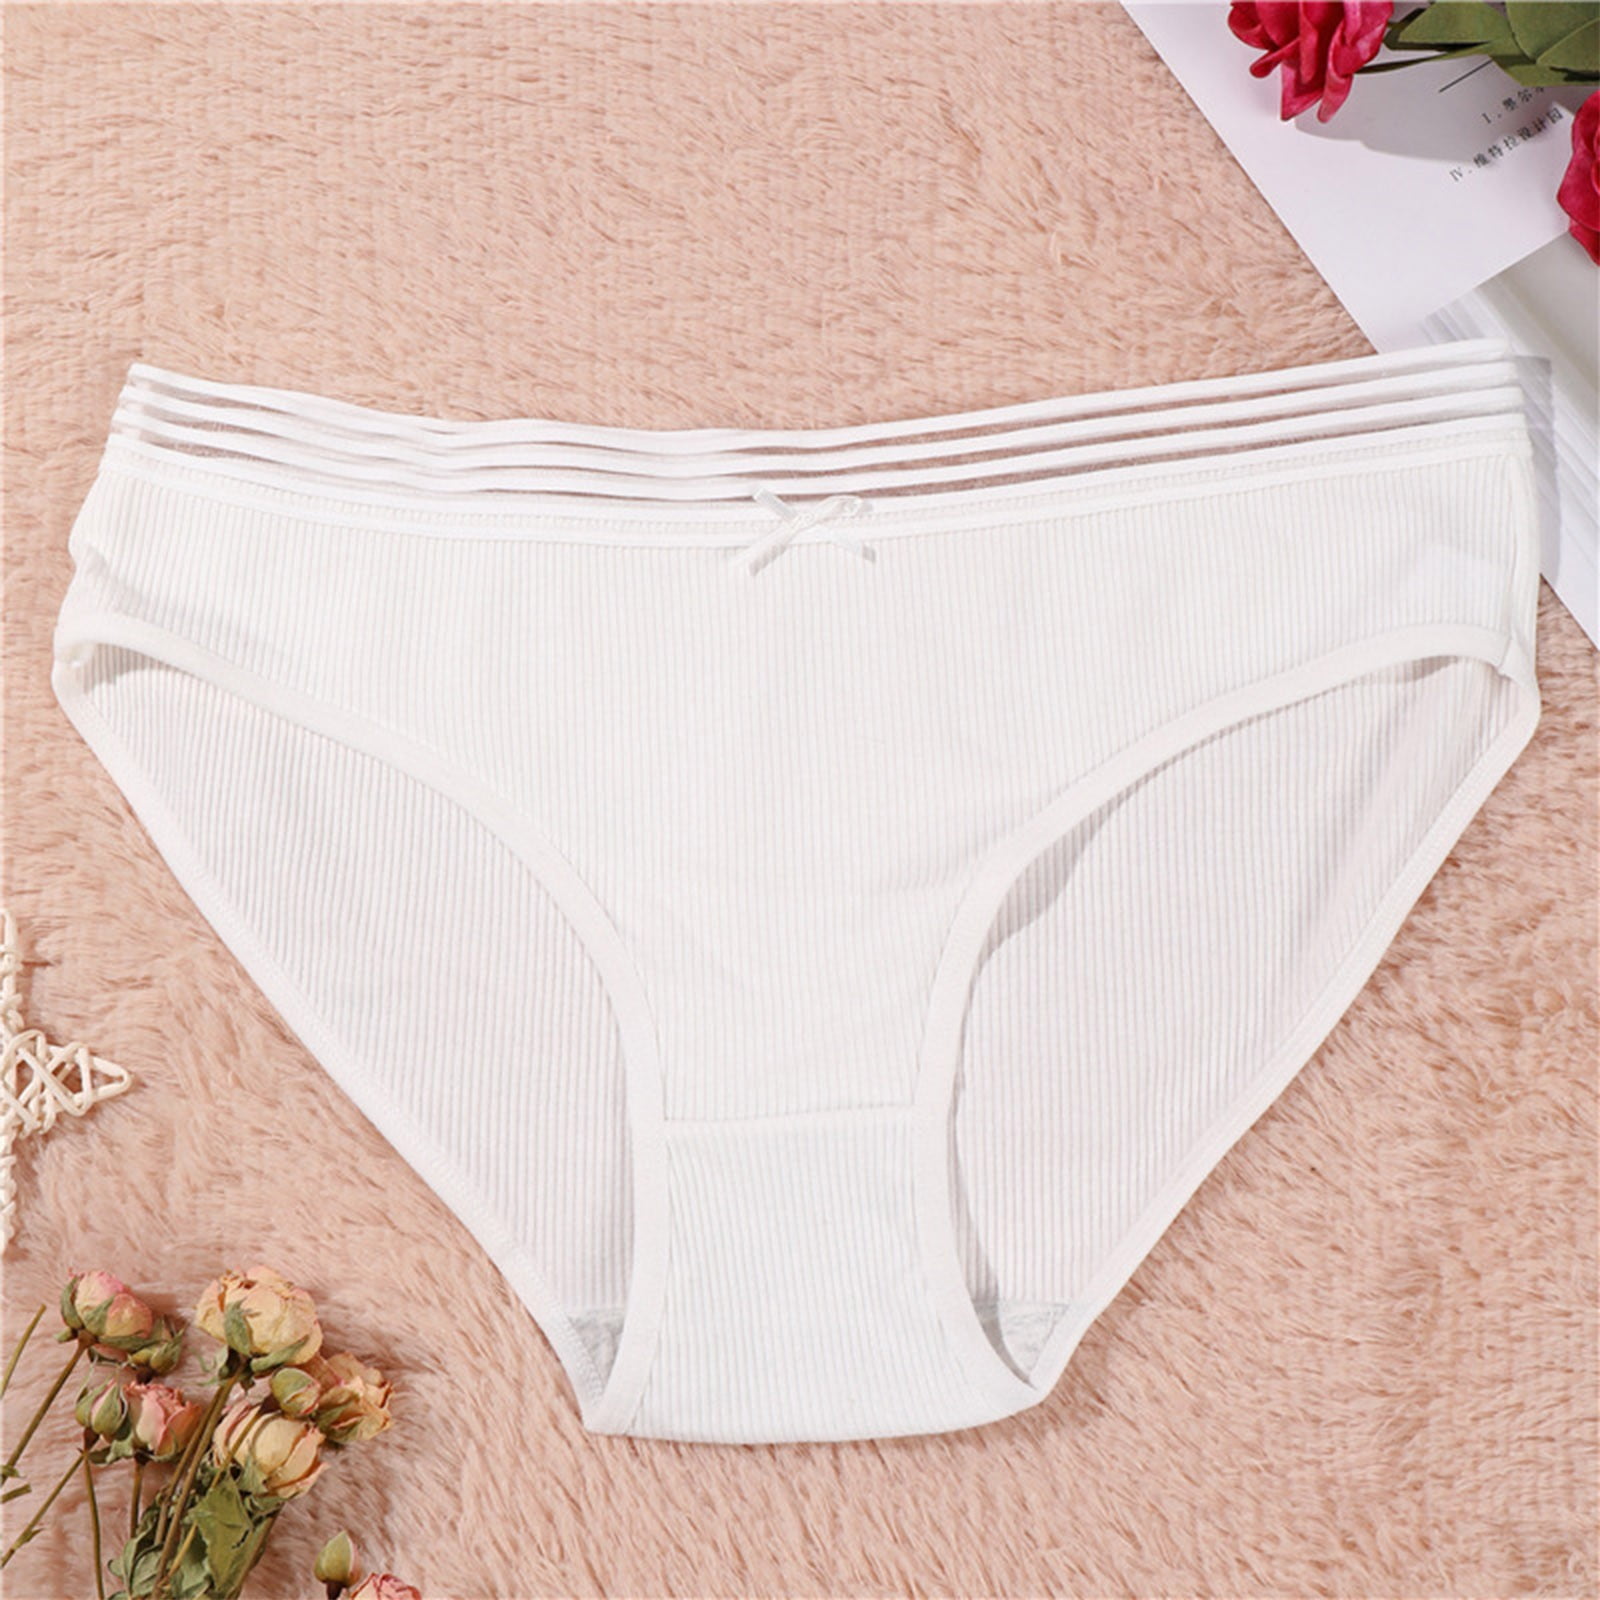 eczipvz Womens Underwear Cotton Ladies Panties Ice Silk Seamless Panties  Solid Color Lace Panties Low Waist Ribbon Briefs White,XL